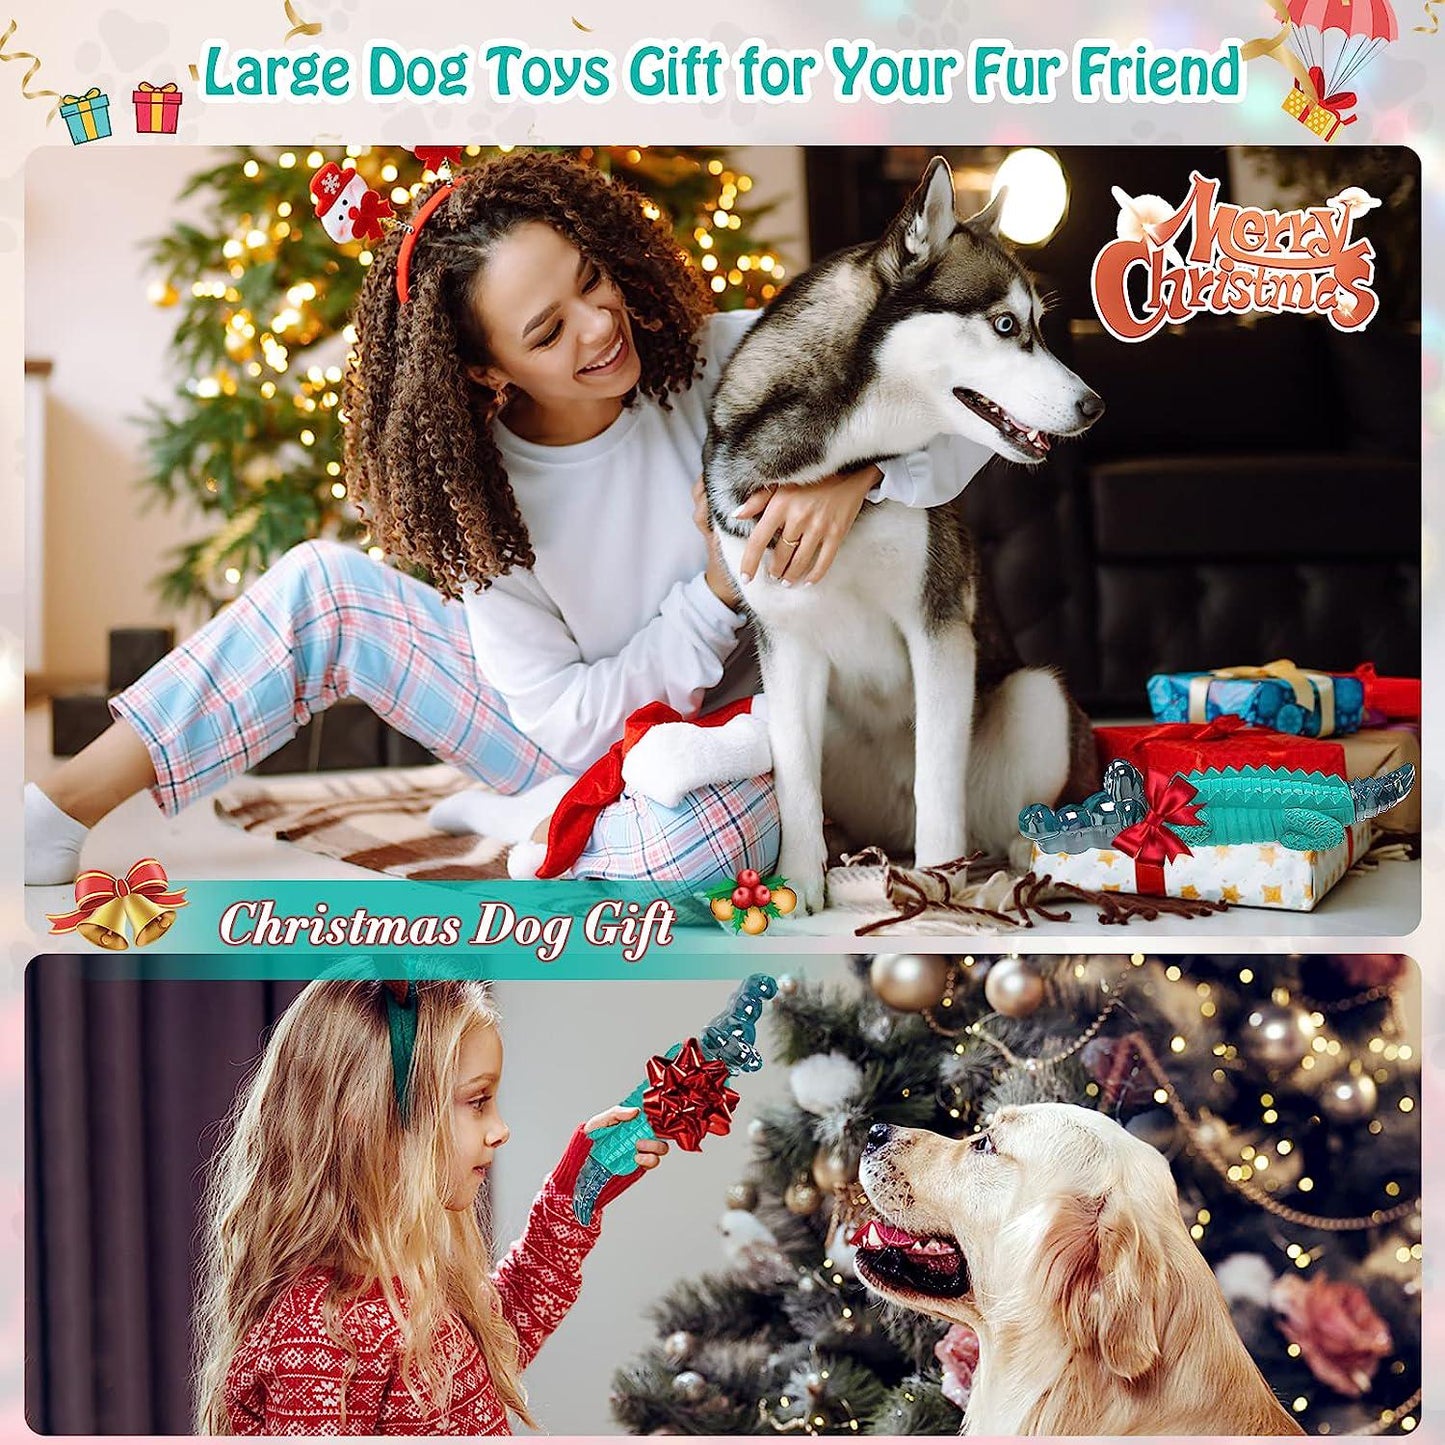 Dog Toys for Aggressive Chewers-Dog Chew Toy/Large Dog Toys/Tough Dog Toys/Heavy Duty Dog Toys/Durable Dog Toys